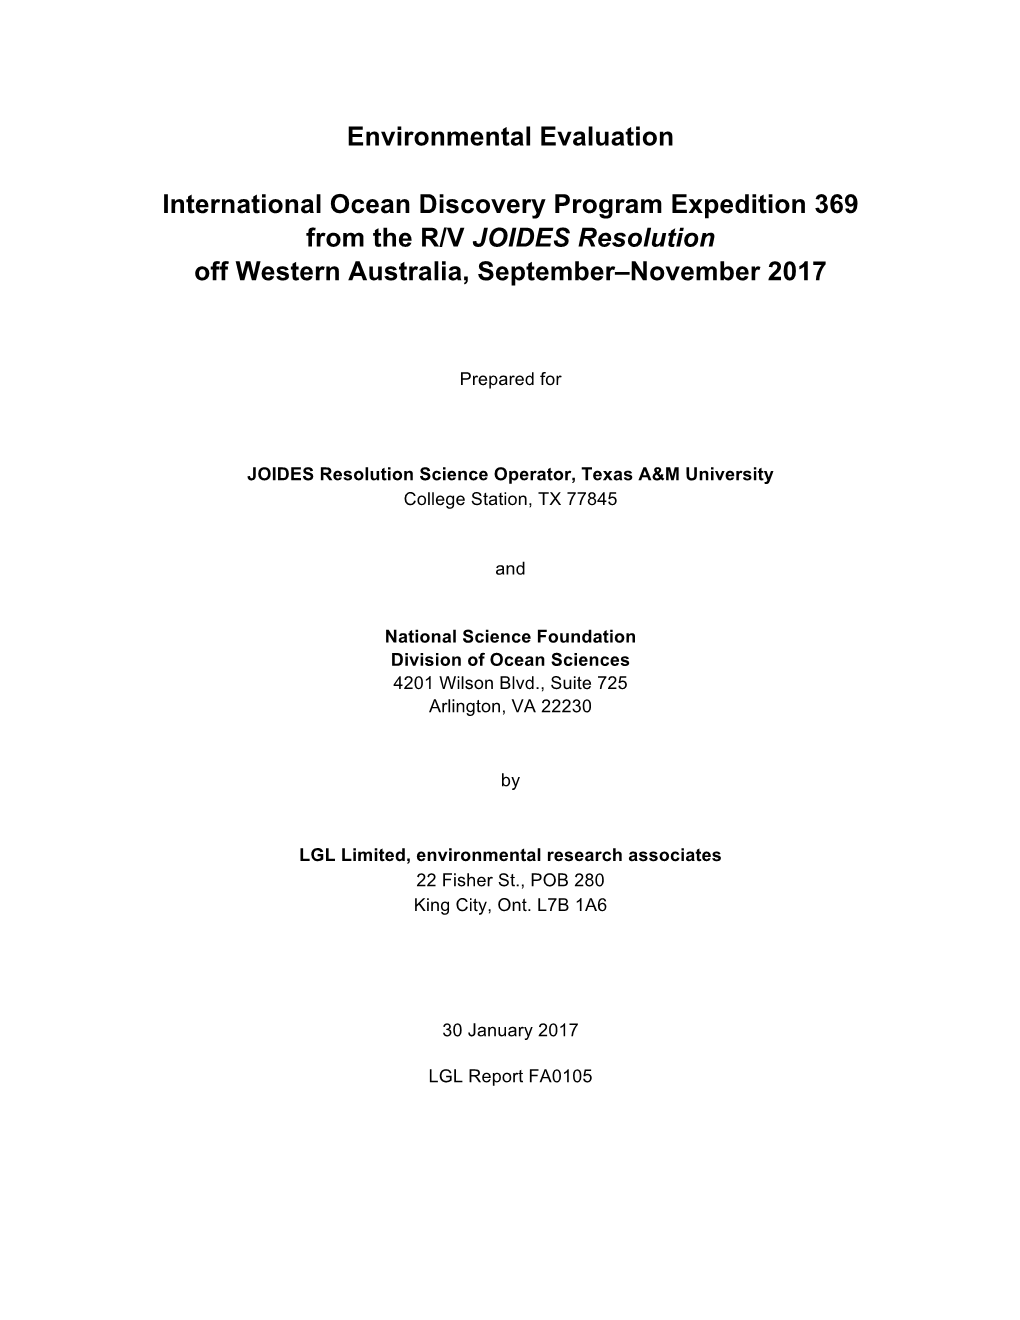 Environmental Evaluation International Ocean Discovery